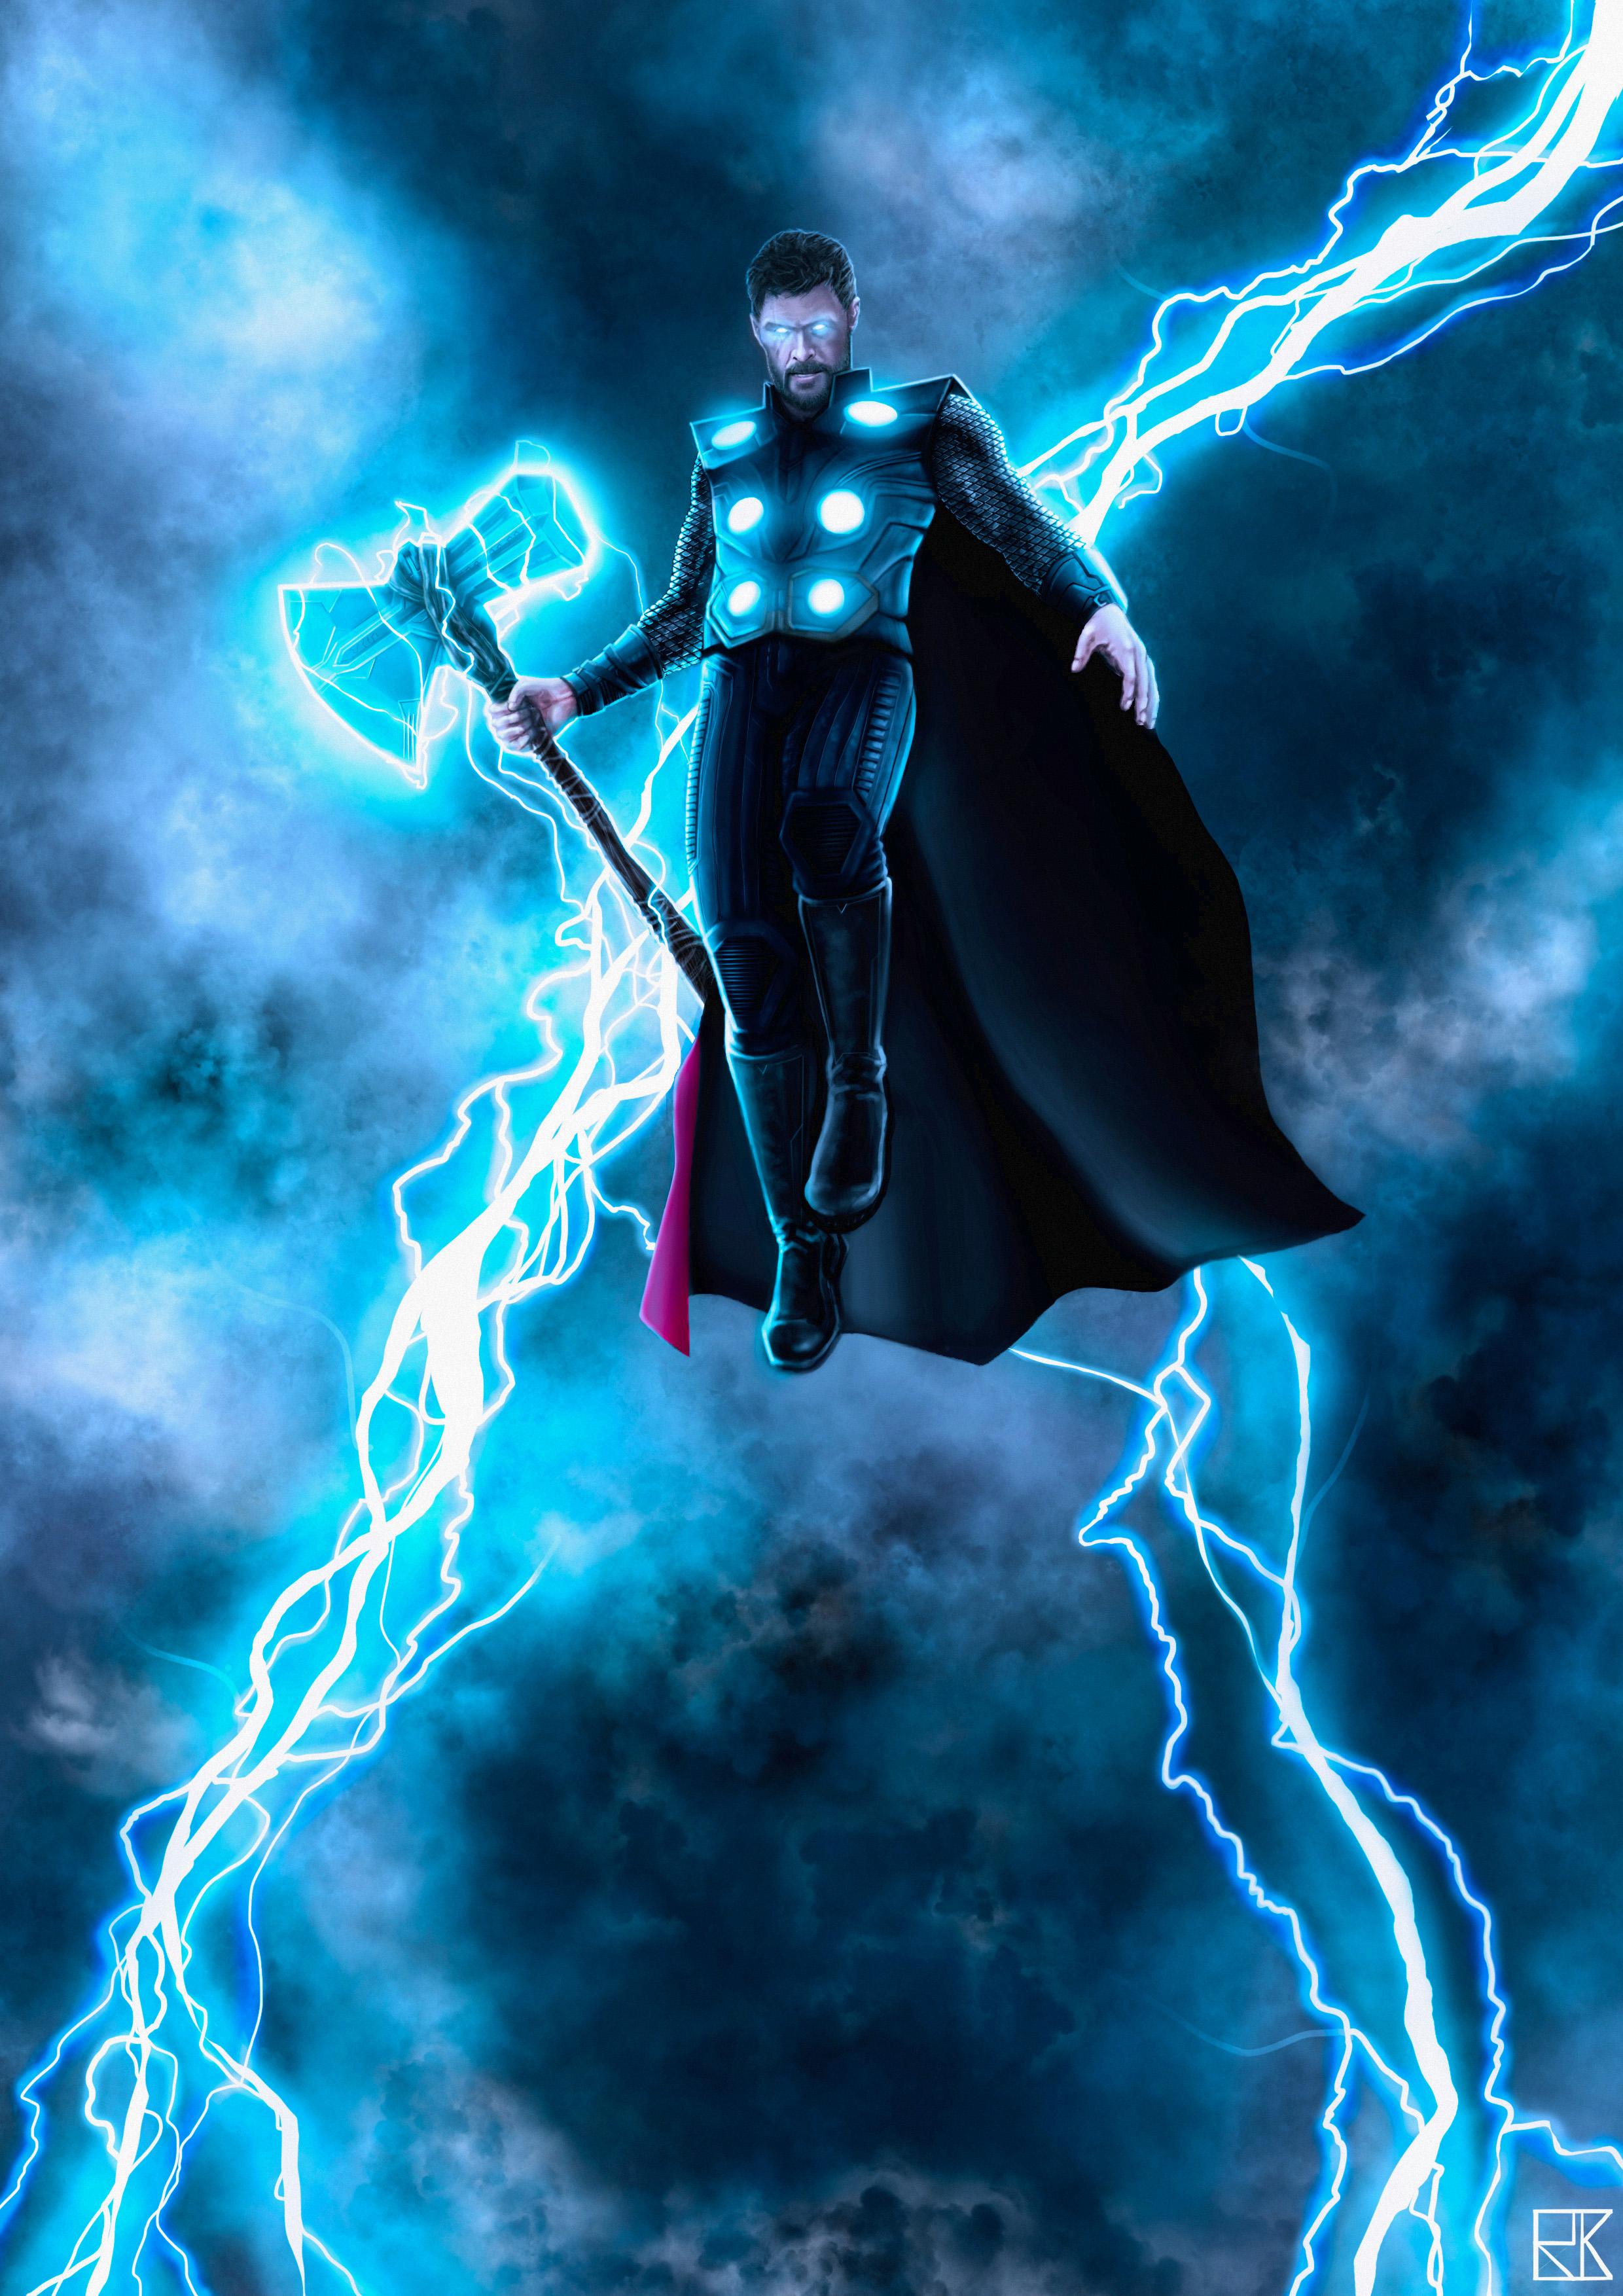 [23+] Thor Vs Thanos Wallpapers on WallpaperSafari